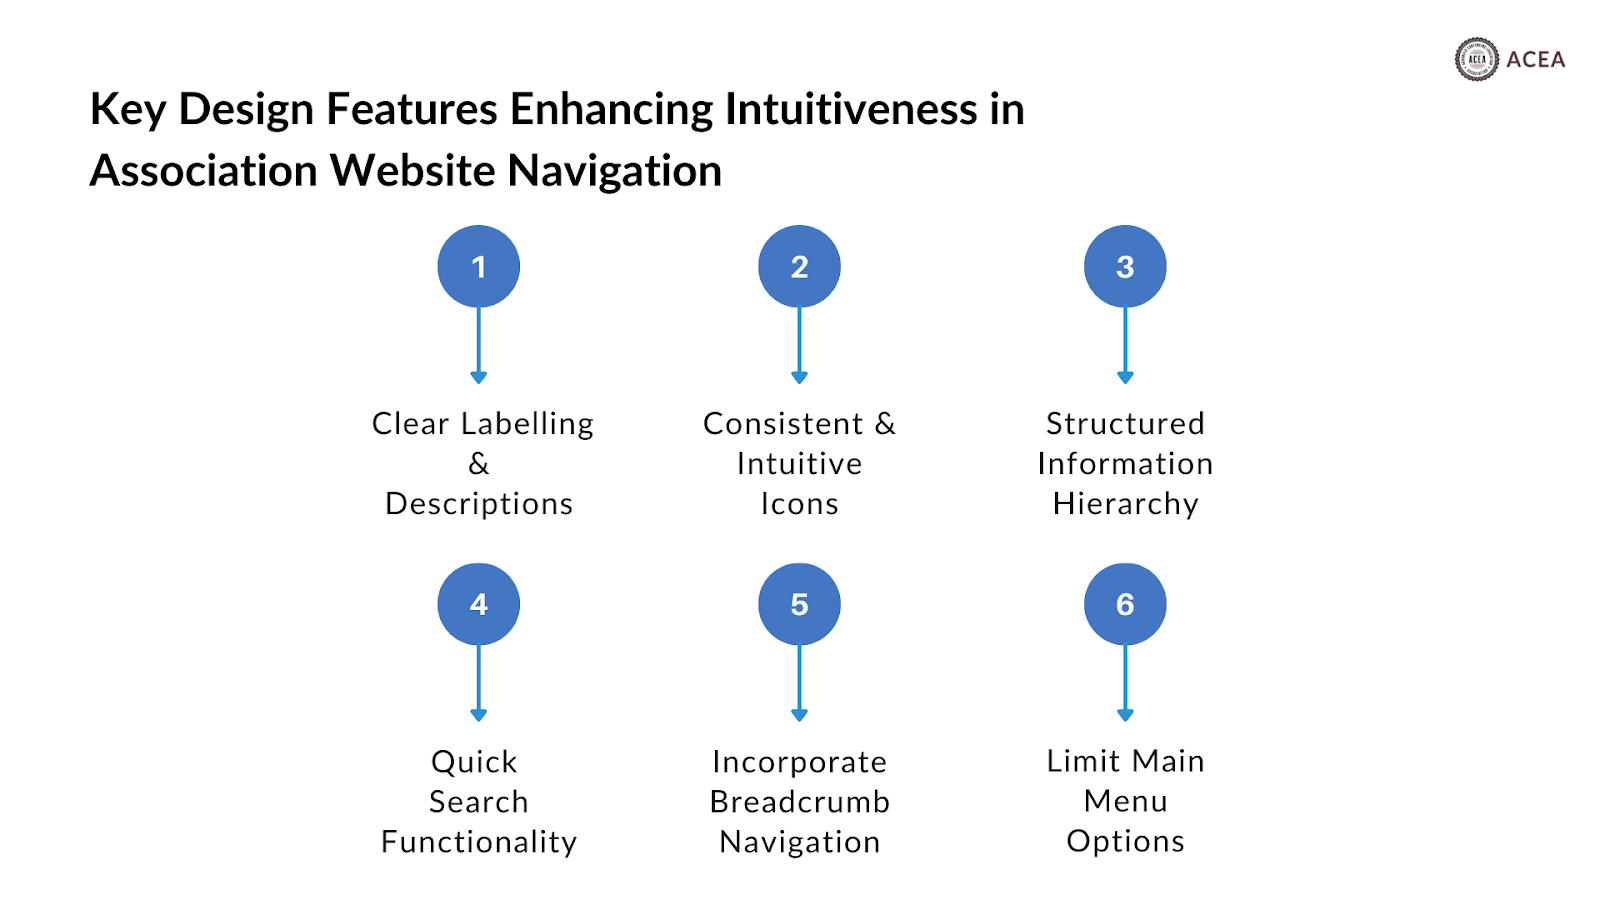 Design features for an intuitive website navigation